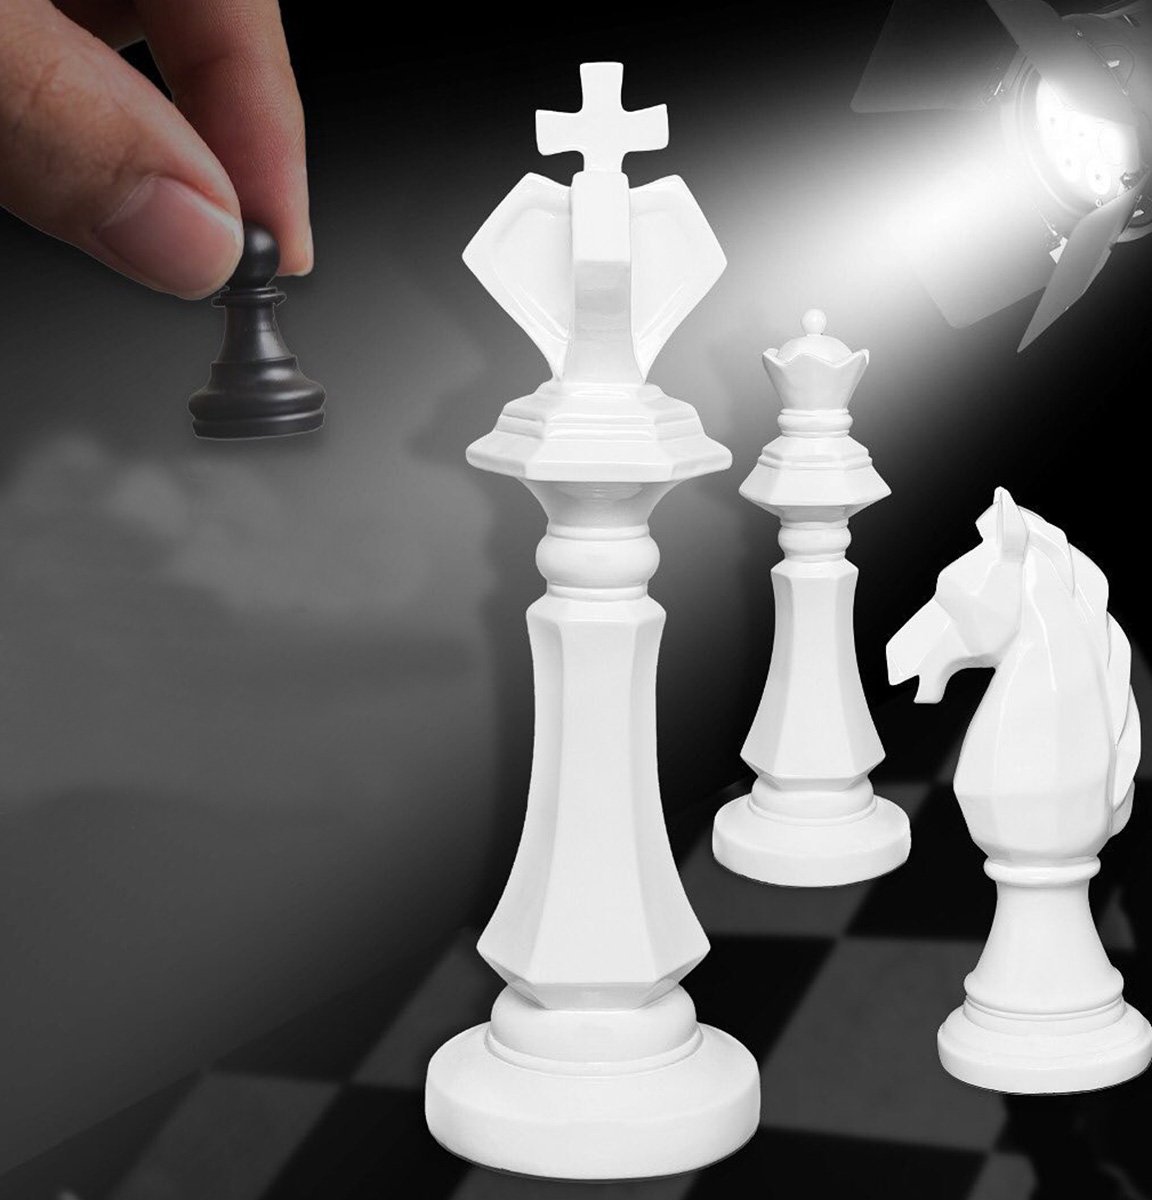 O rei preto versus o rei branco no tabuleiro de xadrez